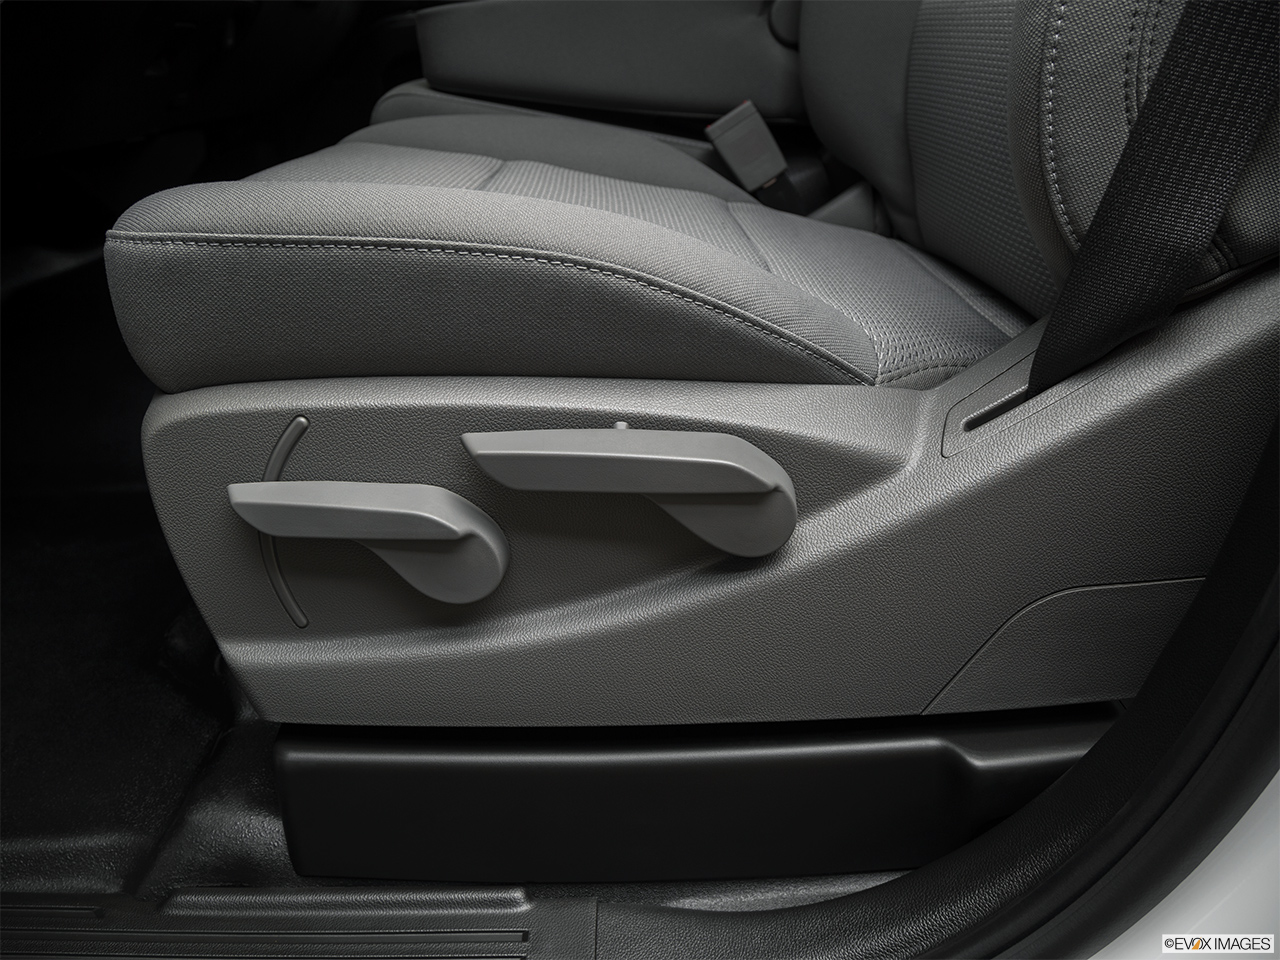 2017 GMC Sierra 3500 HD Base Seat Adjustment Controllers. 